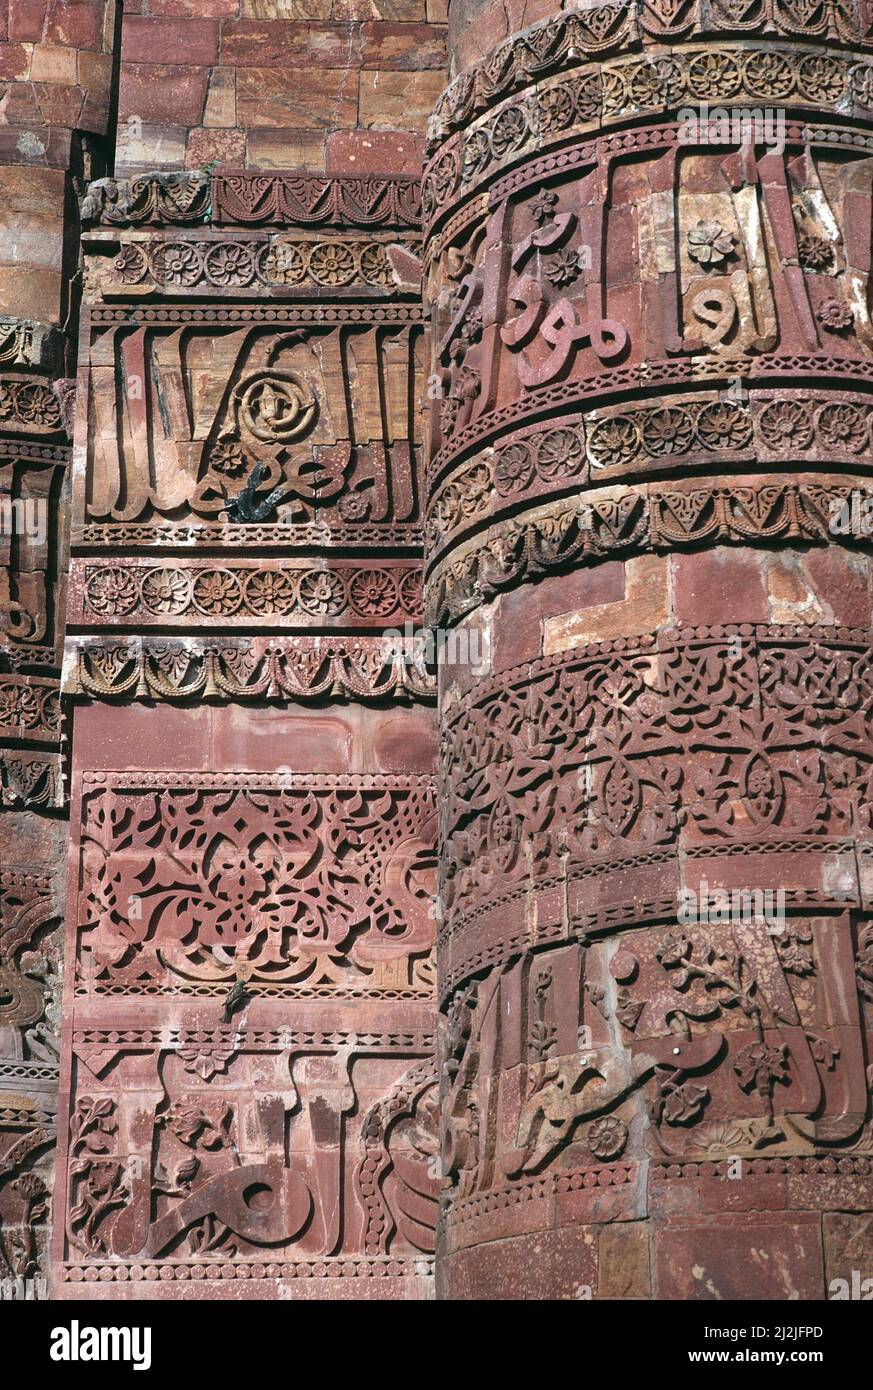 India. Delhi. Qutb Minar. Close up detail of stone carving. Stock Photo